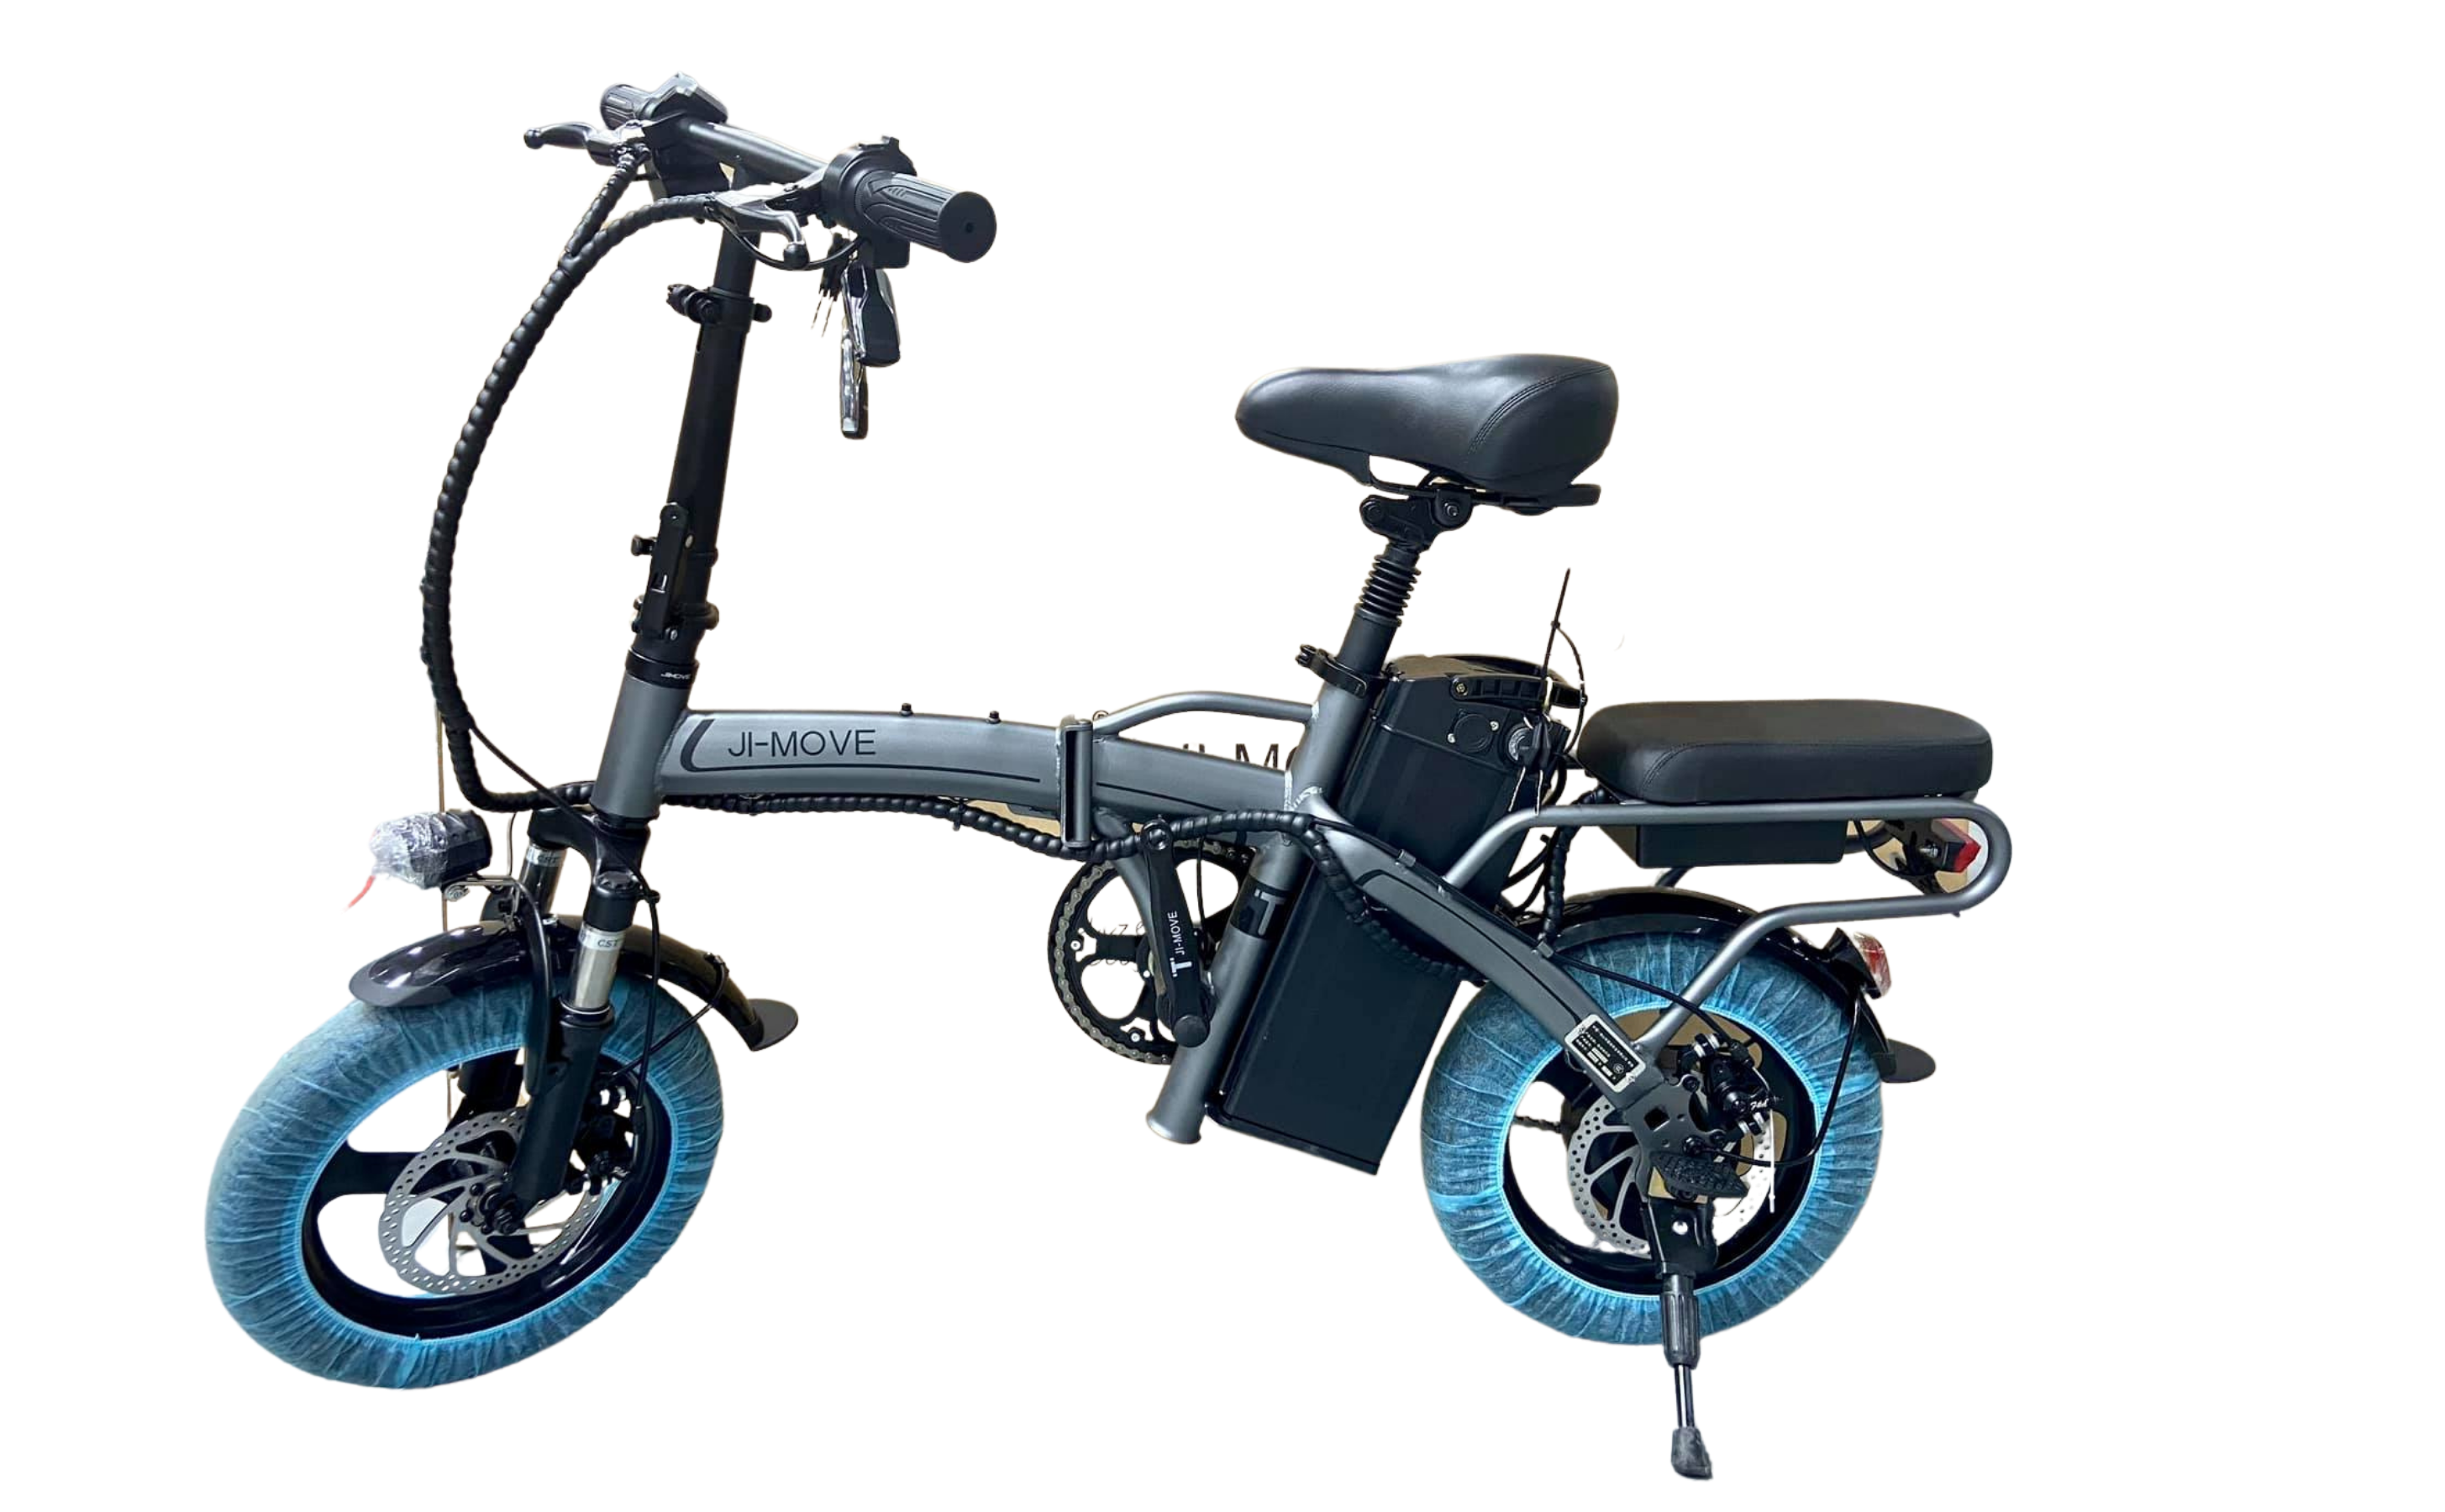 Ji-Move Smart Bike